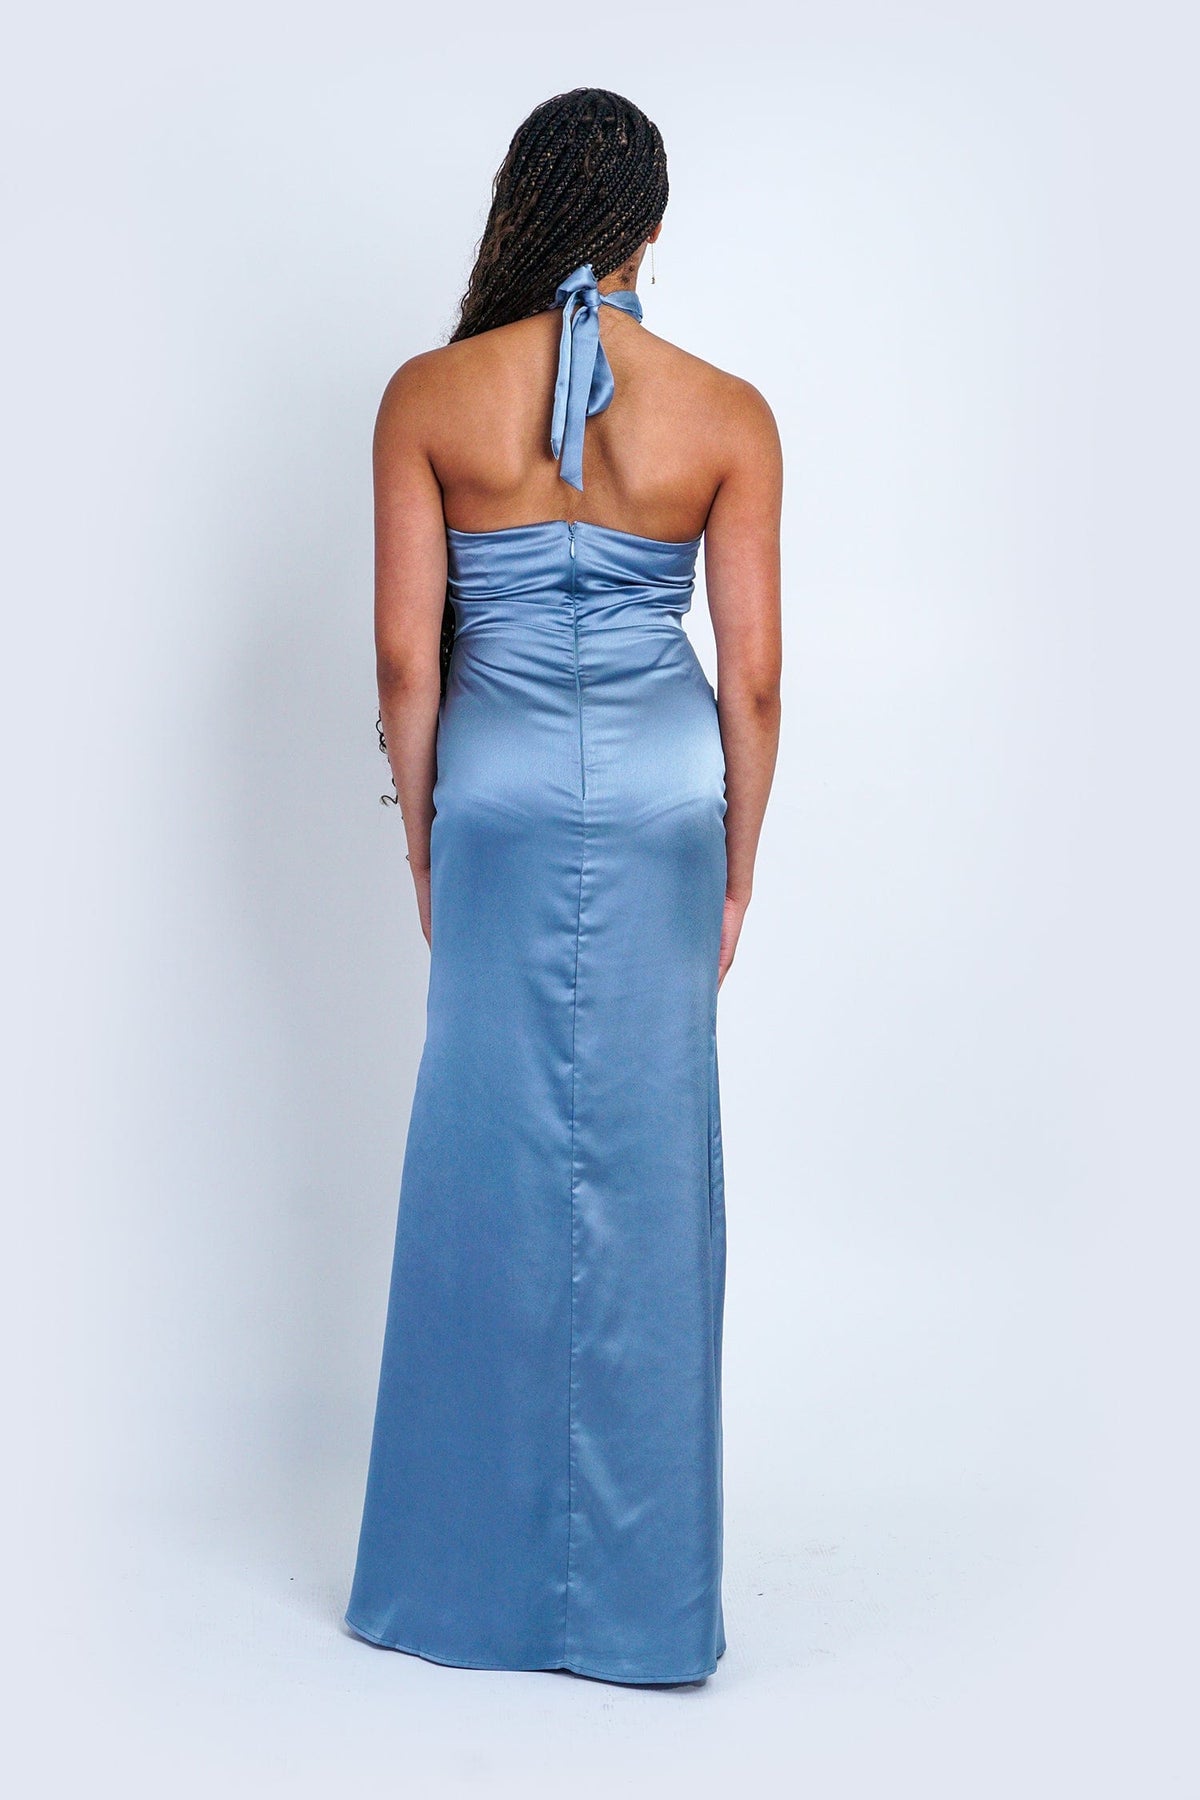 DCD DRESSES Powder Blue Satin Halter Gown